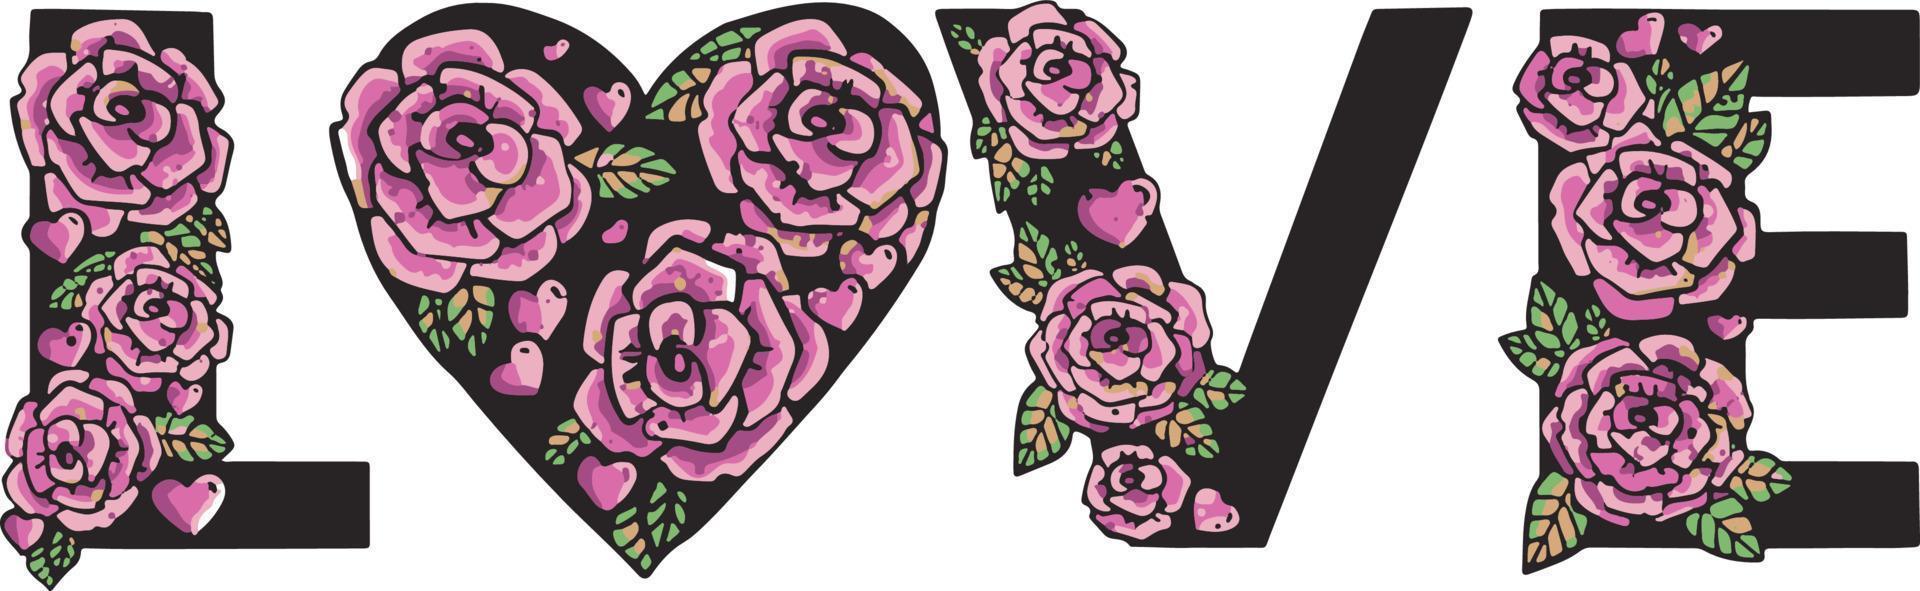 Pink roses LOVE lettering pattern. Black background and illustration vector